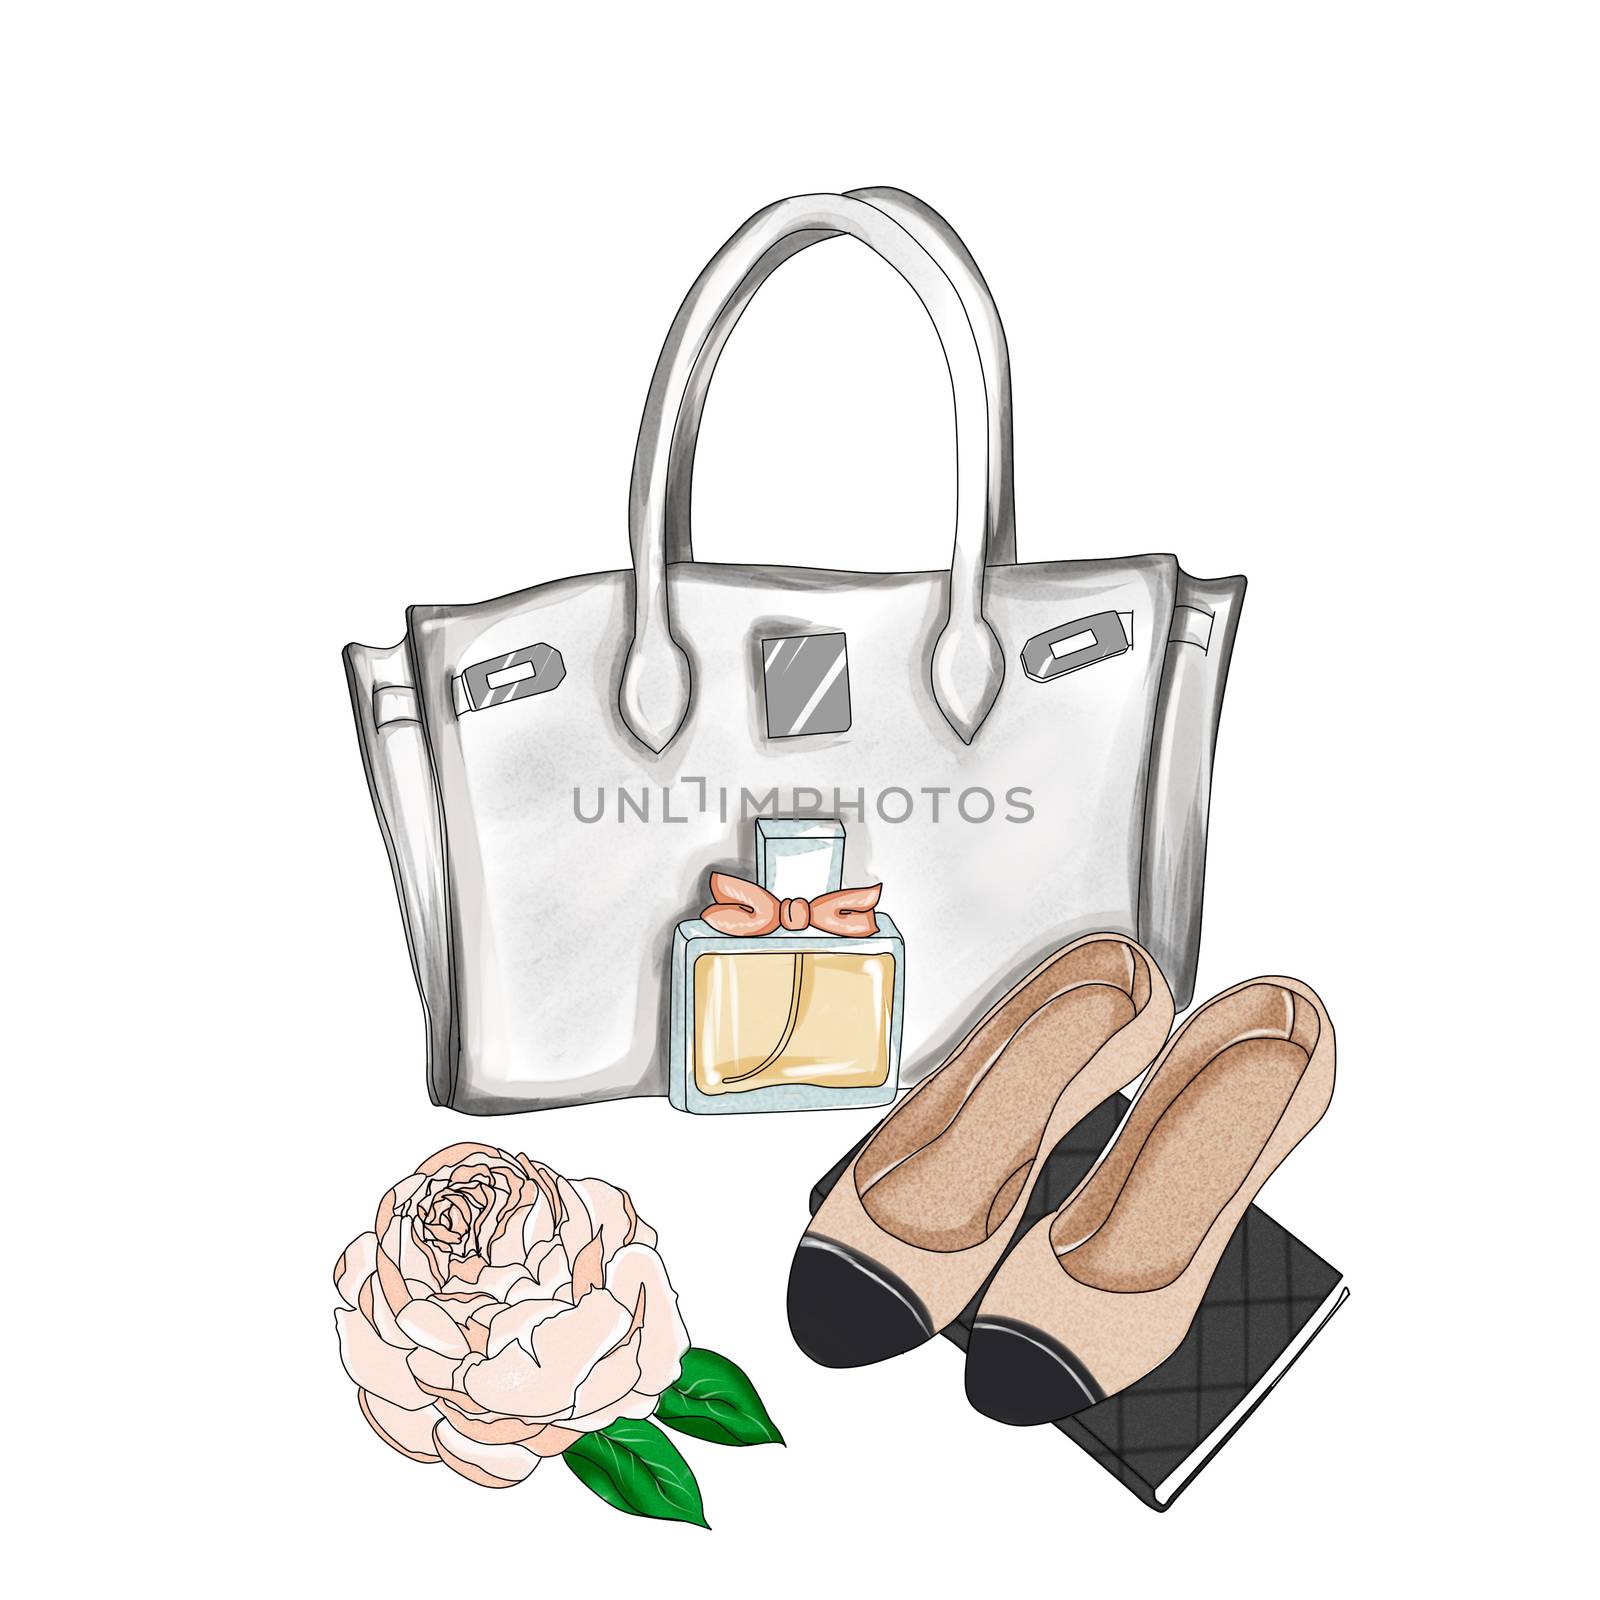 watercolor illustration - Fashion Illustration - Hand drawn raster background - designer bag and flat shoes by GGillustrations